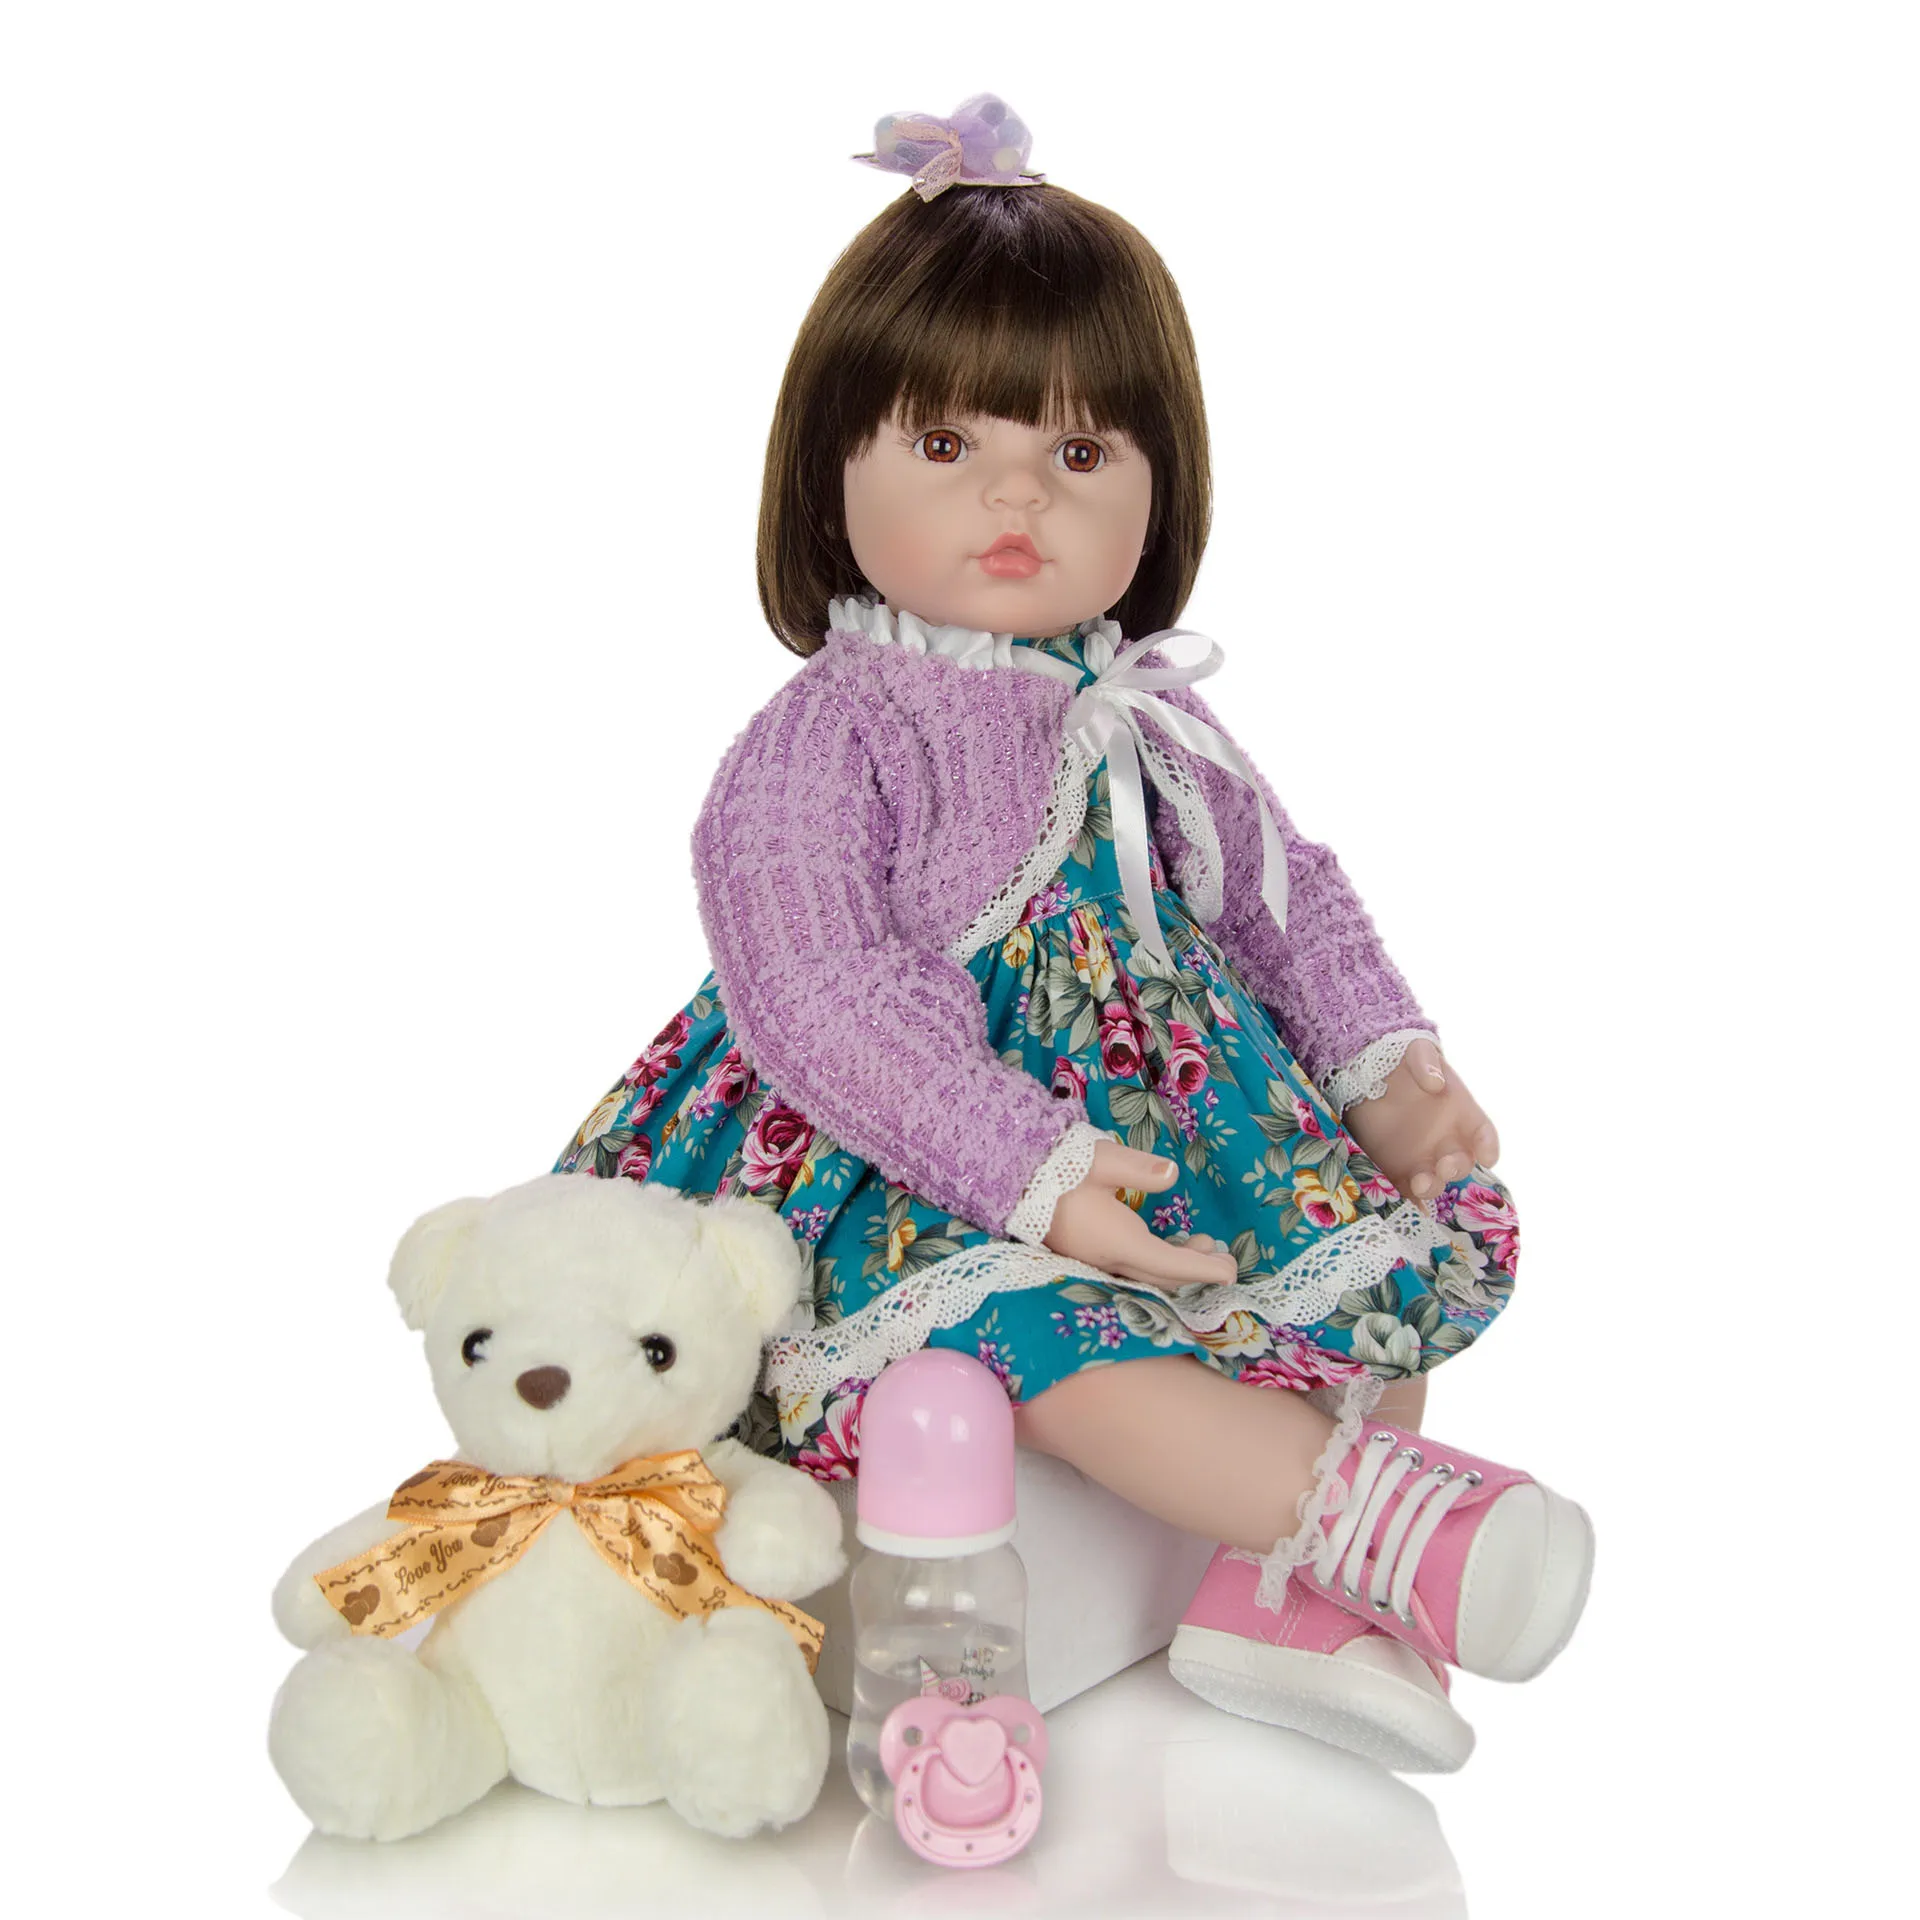 

Bebe doll reborn toddler silicone vinyl limbs 24"60cm infant girl princess realista bonecas children gift toy dolls